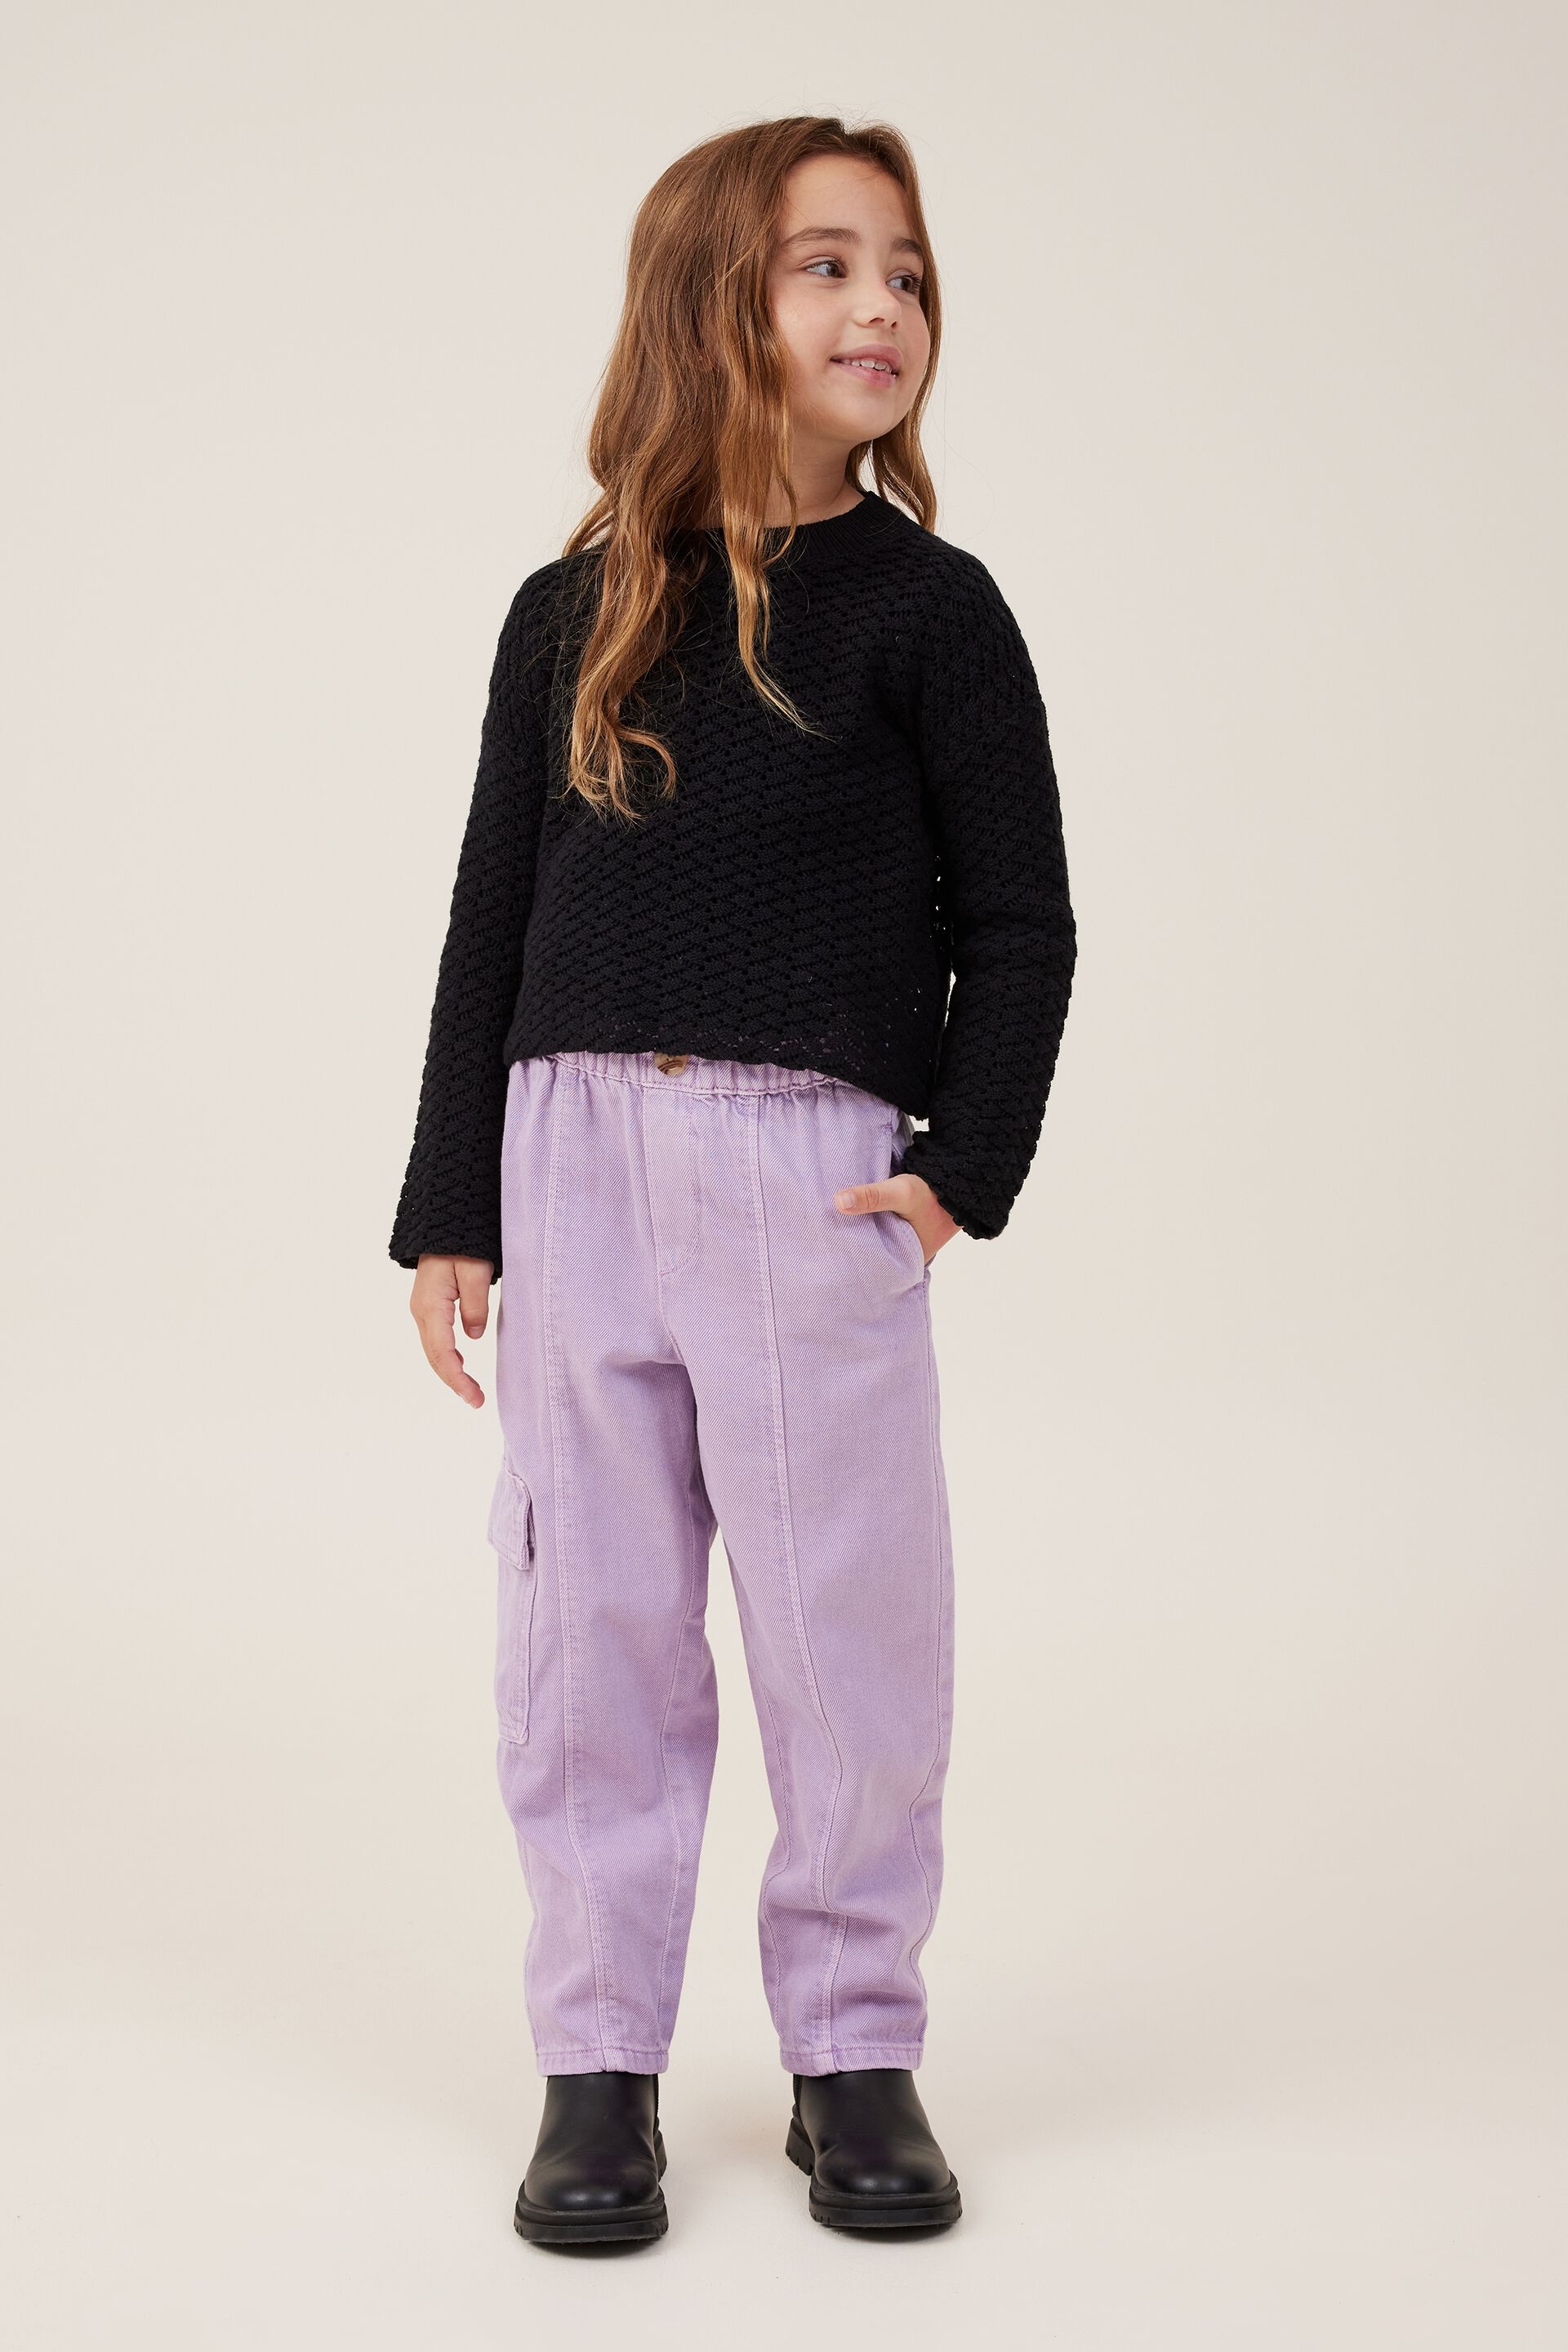 Ladies Hip Hop Pants Oversized Baggy Trousers Purple Cargo Pants Streetwear  Suit | eBay